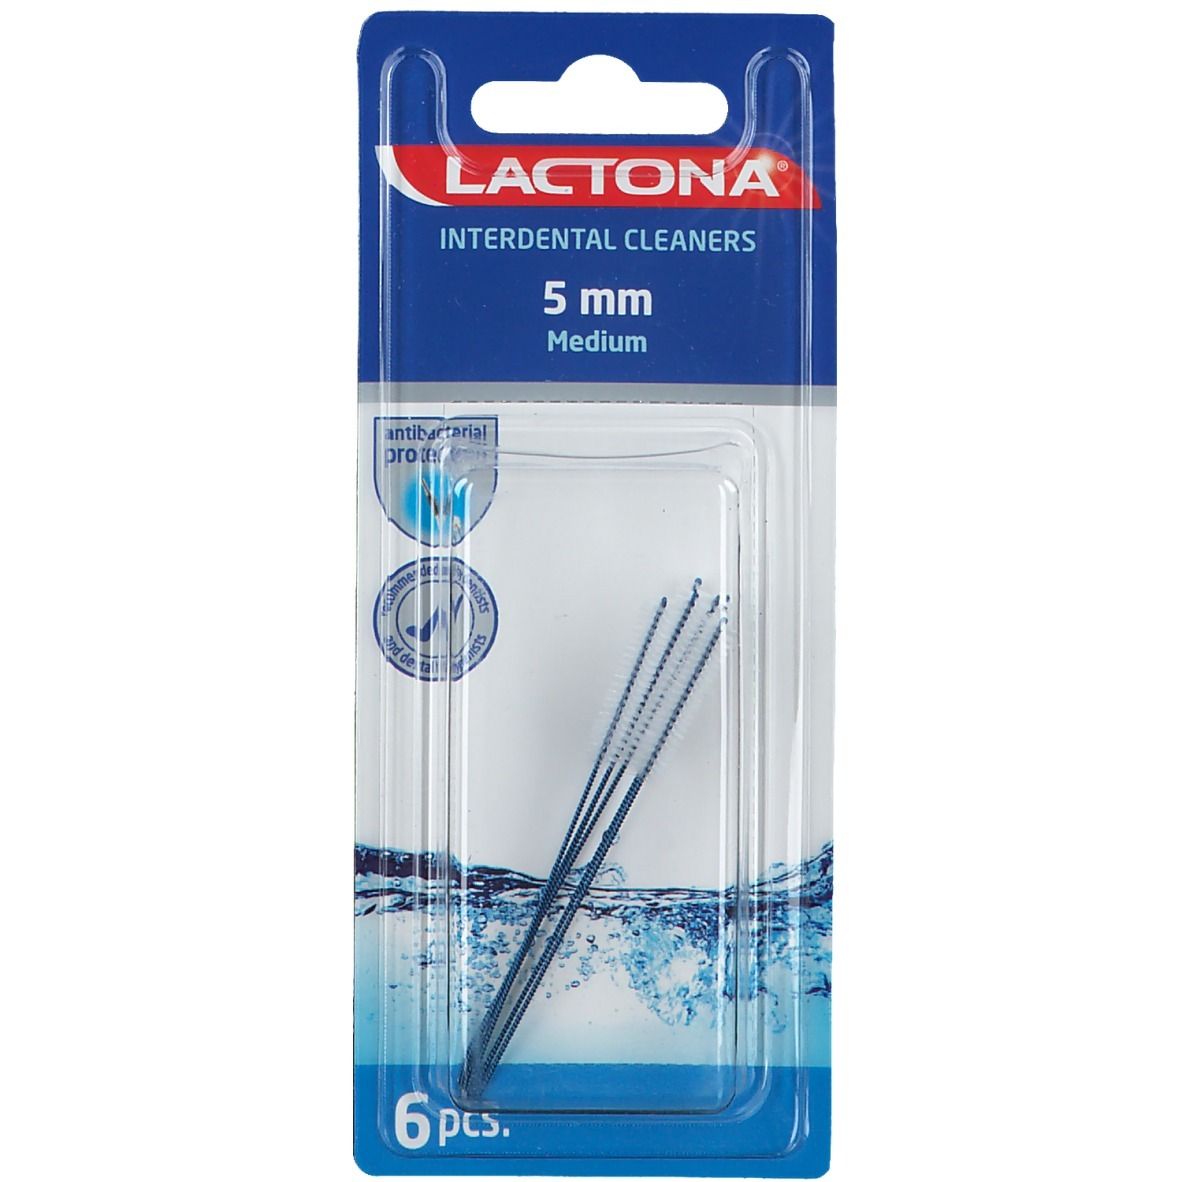 Lactona Interdental Cleaners 5 mm Medium